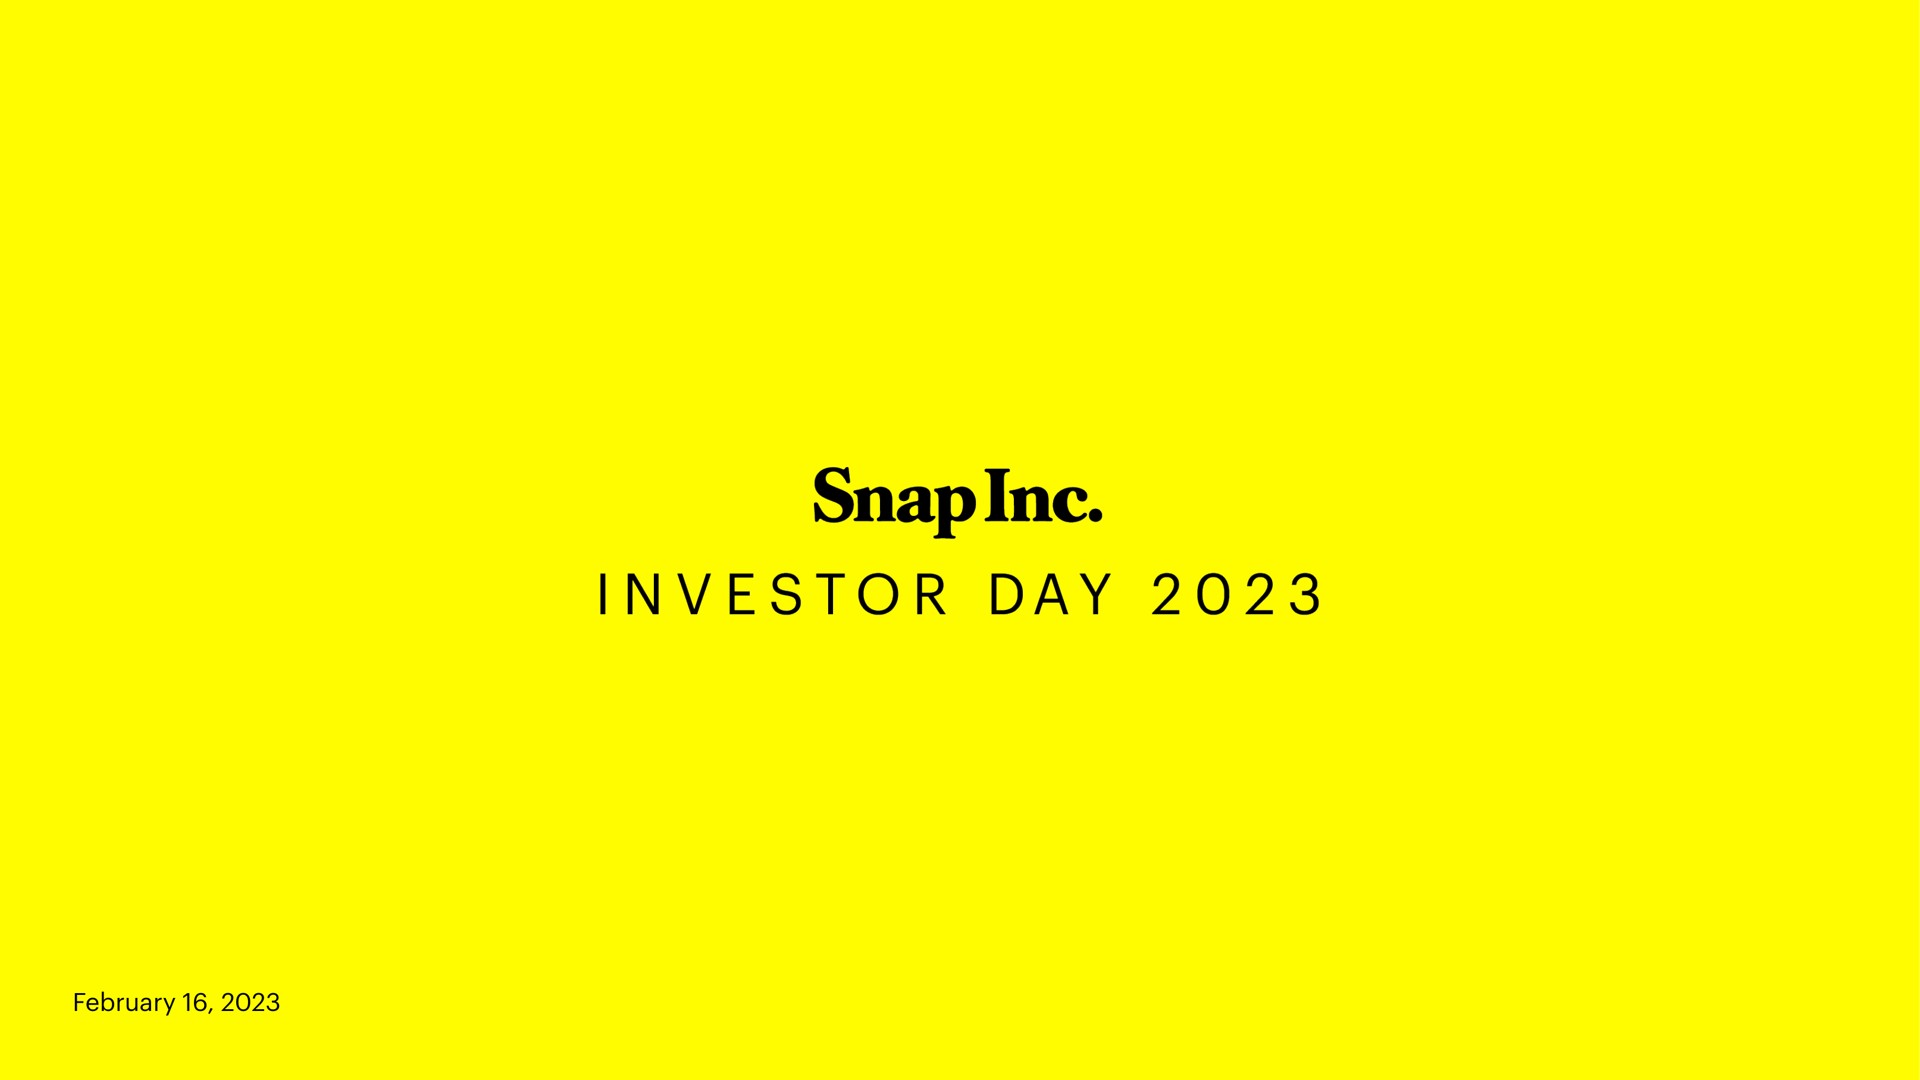 snap investor day | Snap Inc